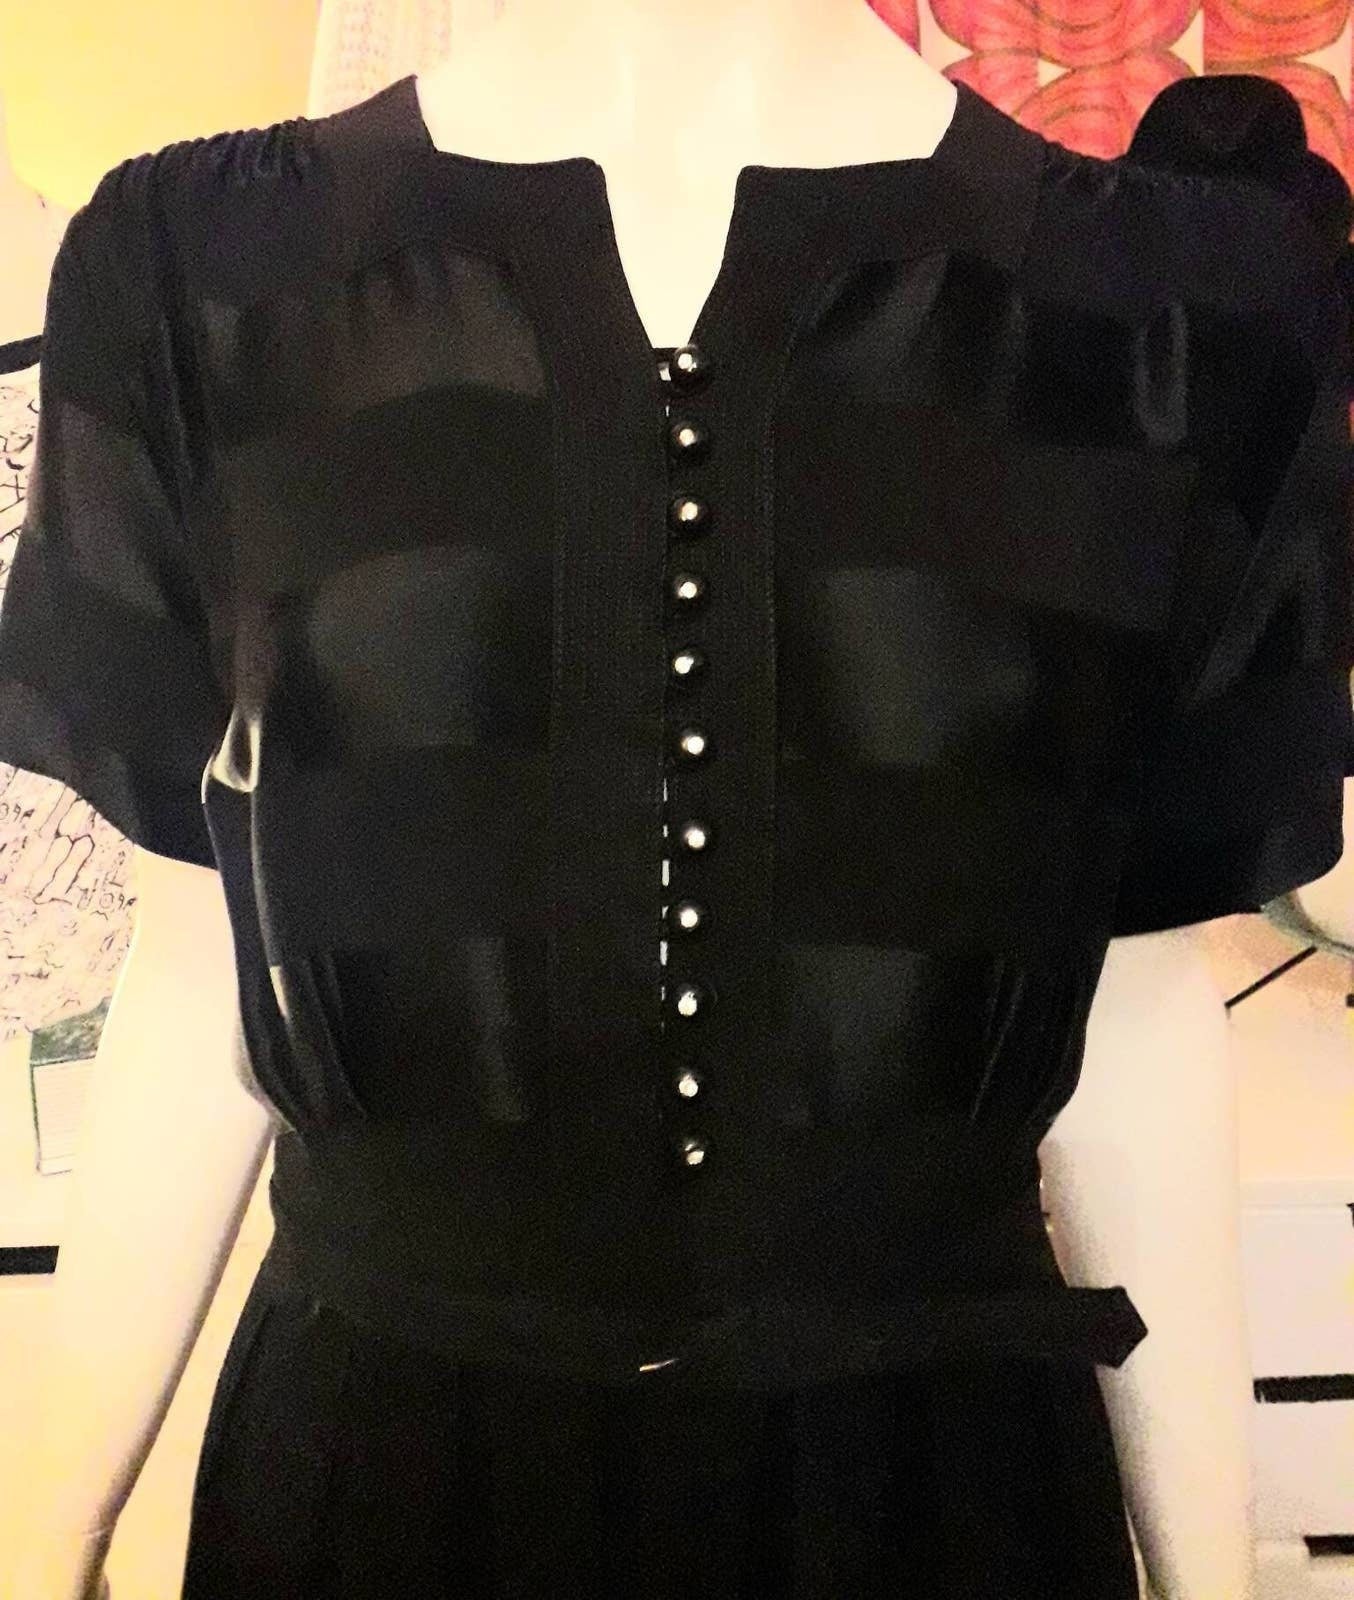 Vintage 1940s 50s Dress Black Rayon Crepe Satin Contrasting Stripes Rhinestone Buttons Day Dress Film Noir Rockabilly Plus Size XL